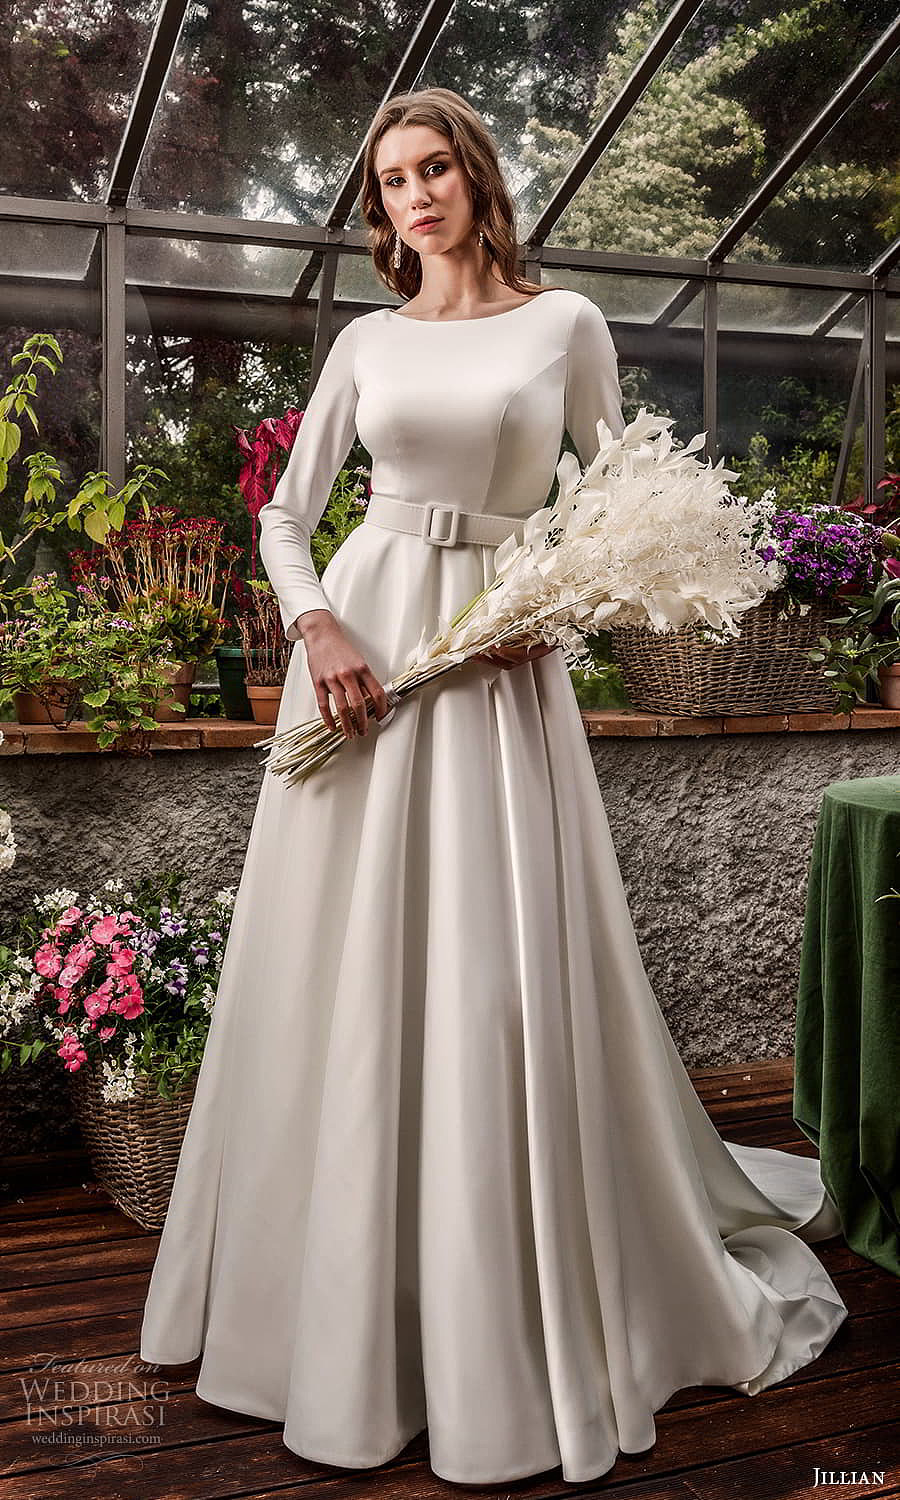 Jillian 2022"Secret Garden" 婚纱系列 打造令人难以置信的浪漫嫁 - 38